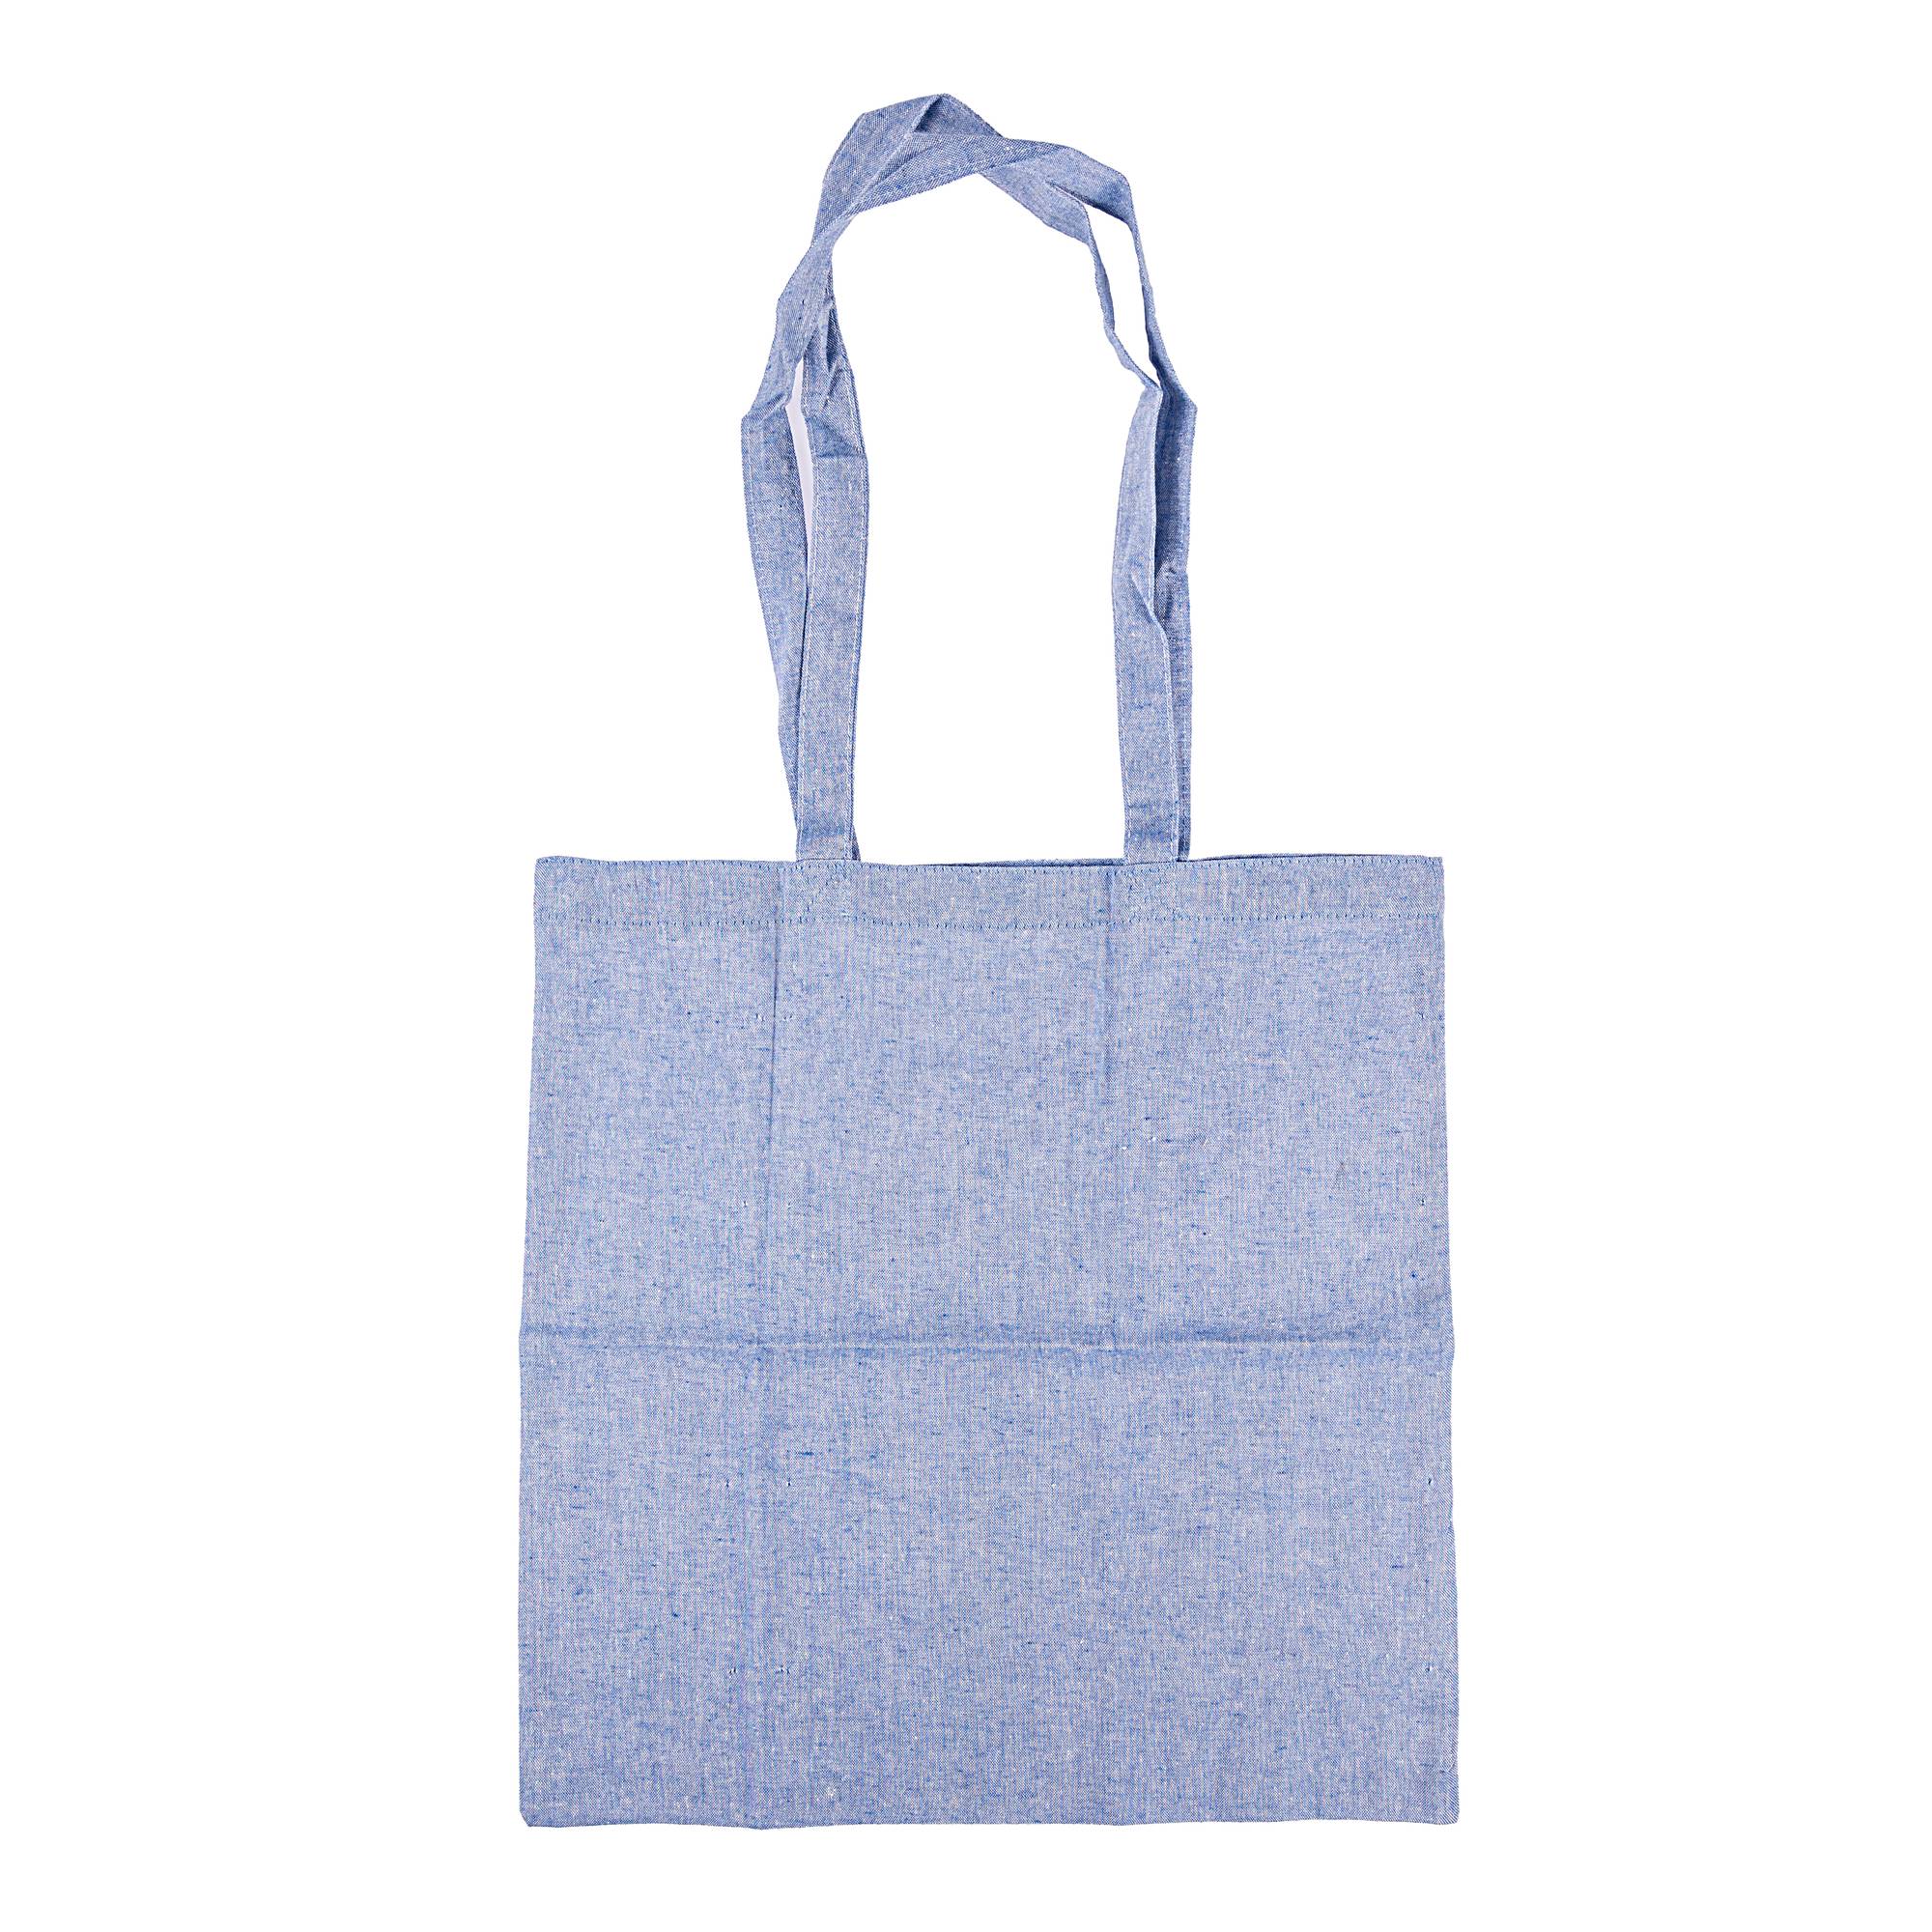 664463 1000 1 hobbycraft cotton shopping bag blue